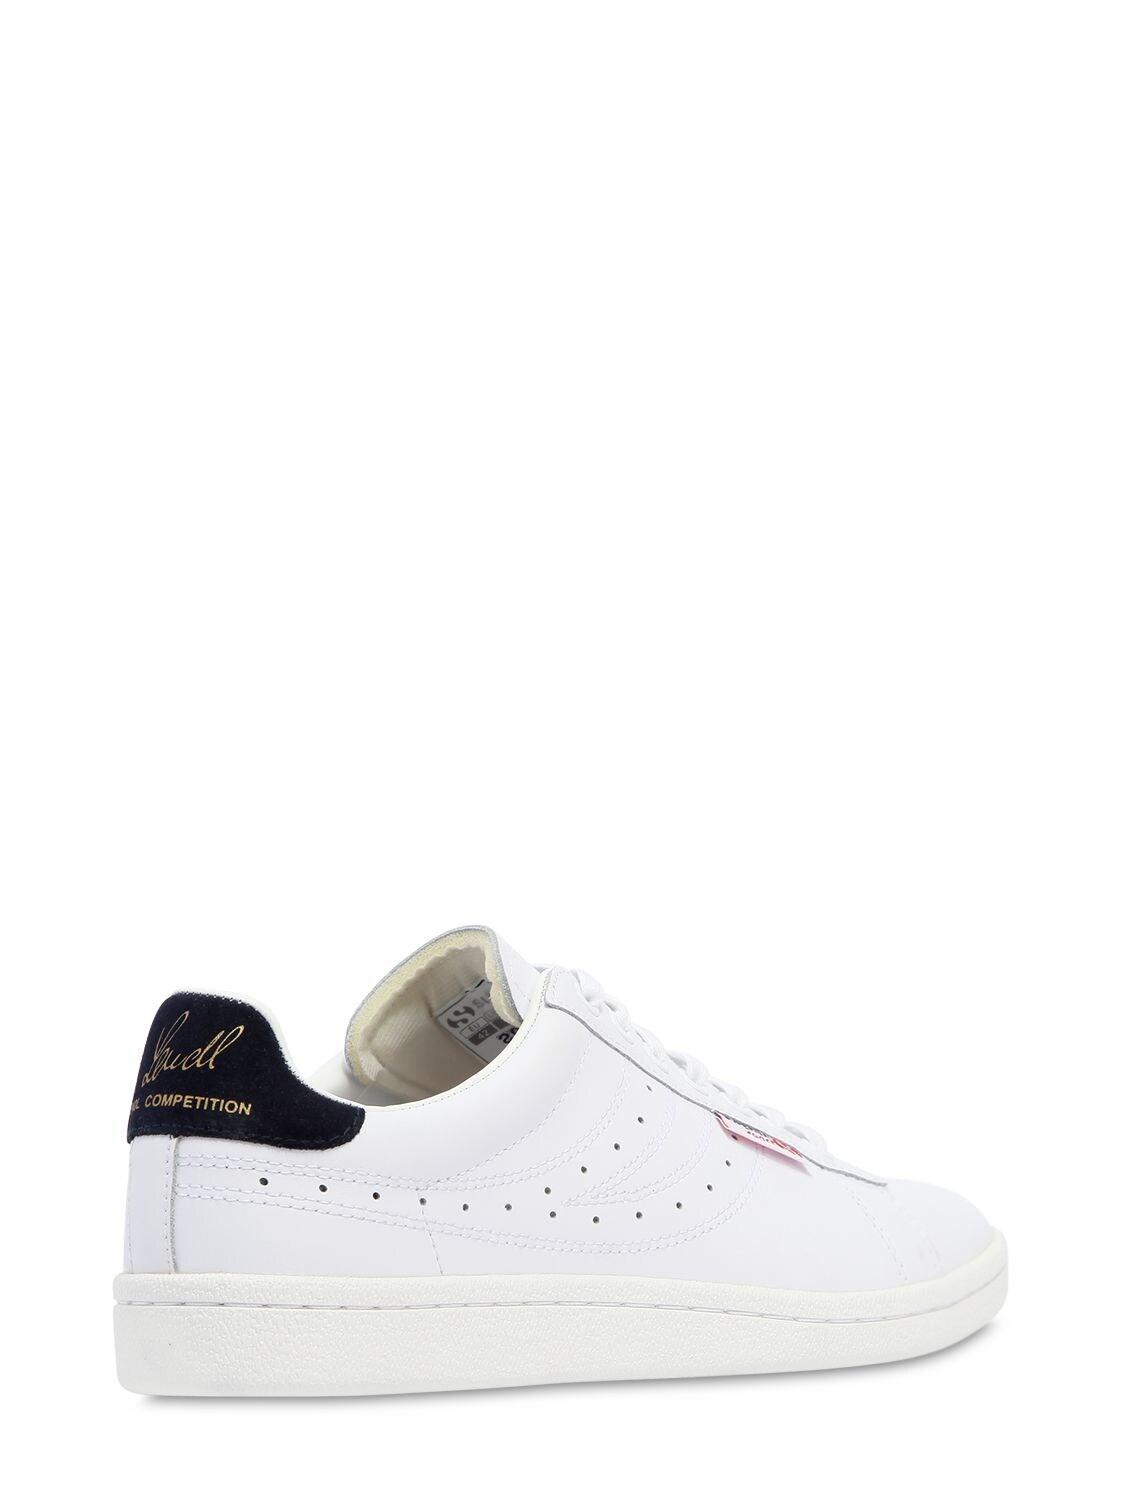 Superga Ivan Lendl Leather Sneakers in White/Navy (White) for Men | Lyst